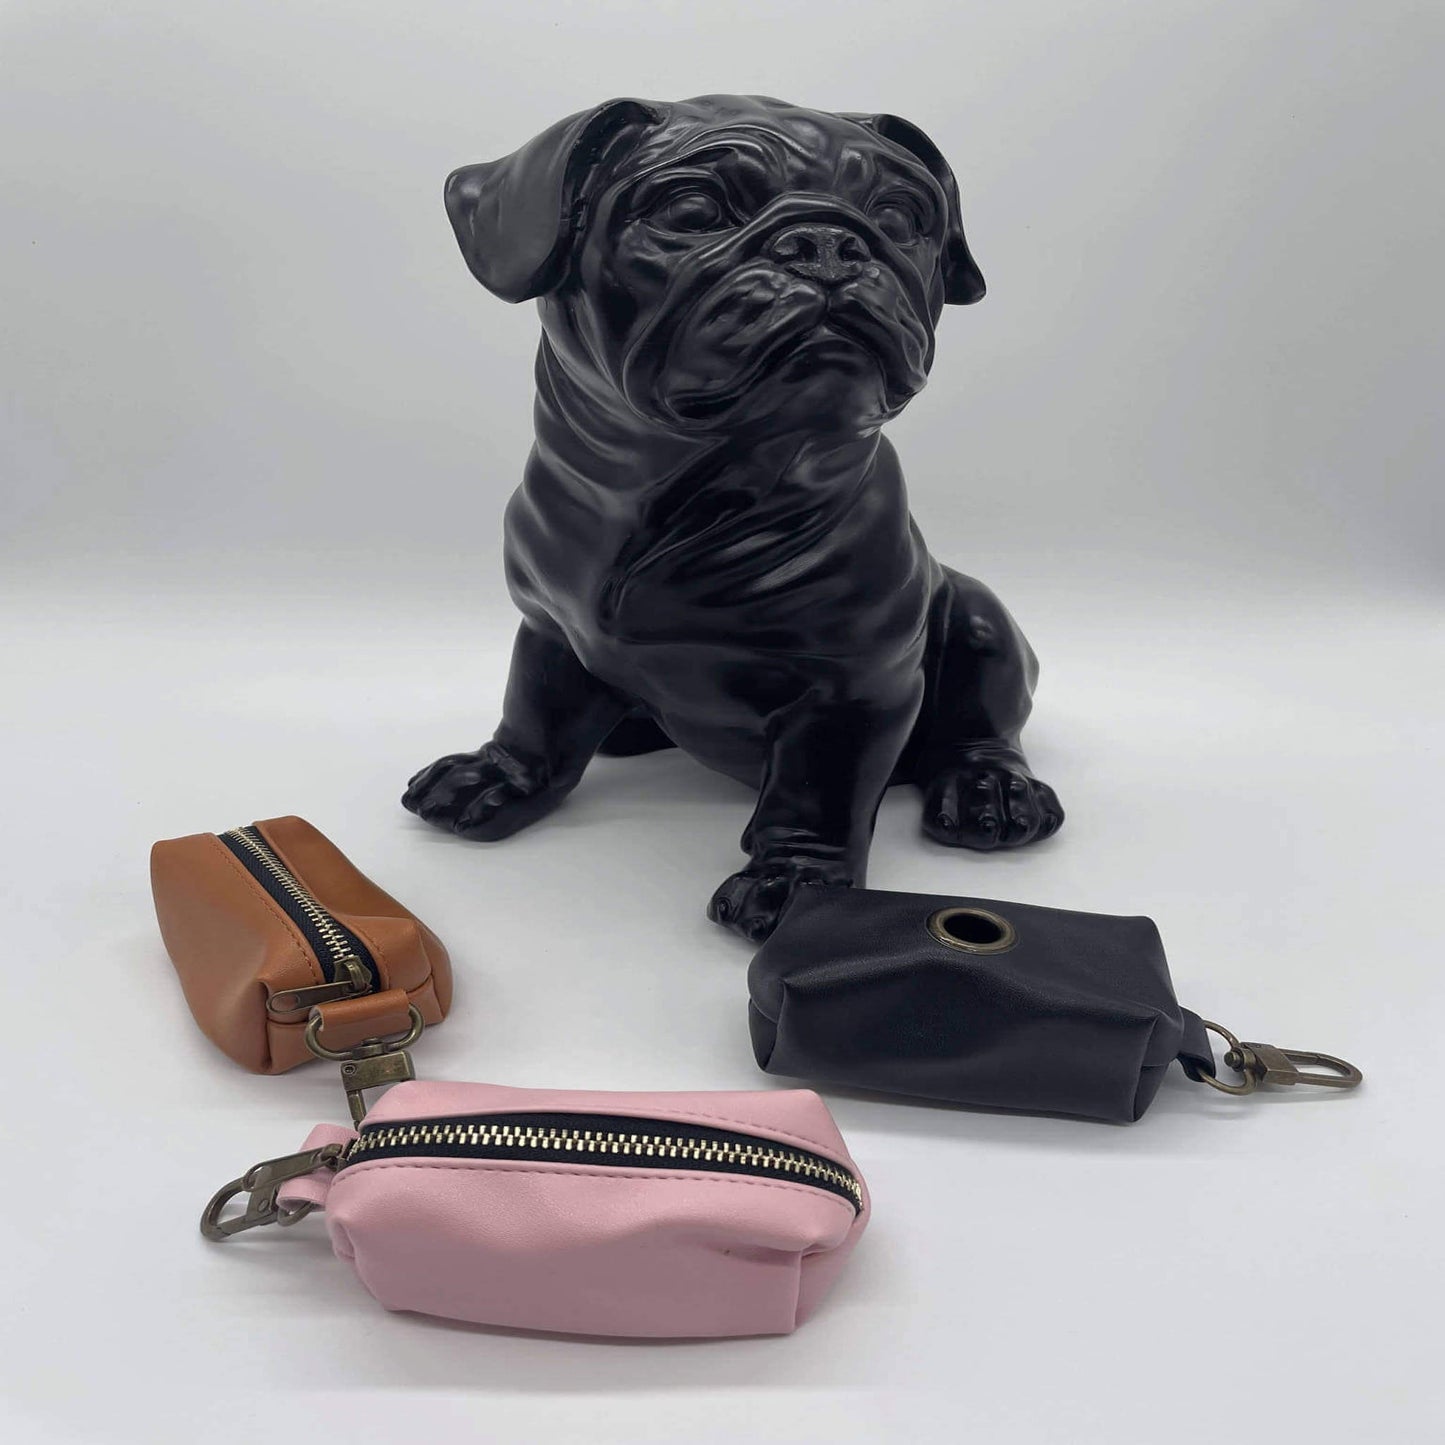 CLEAN Stylish dog bag holder